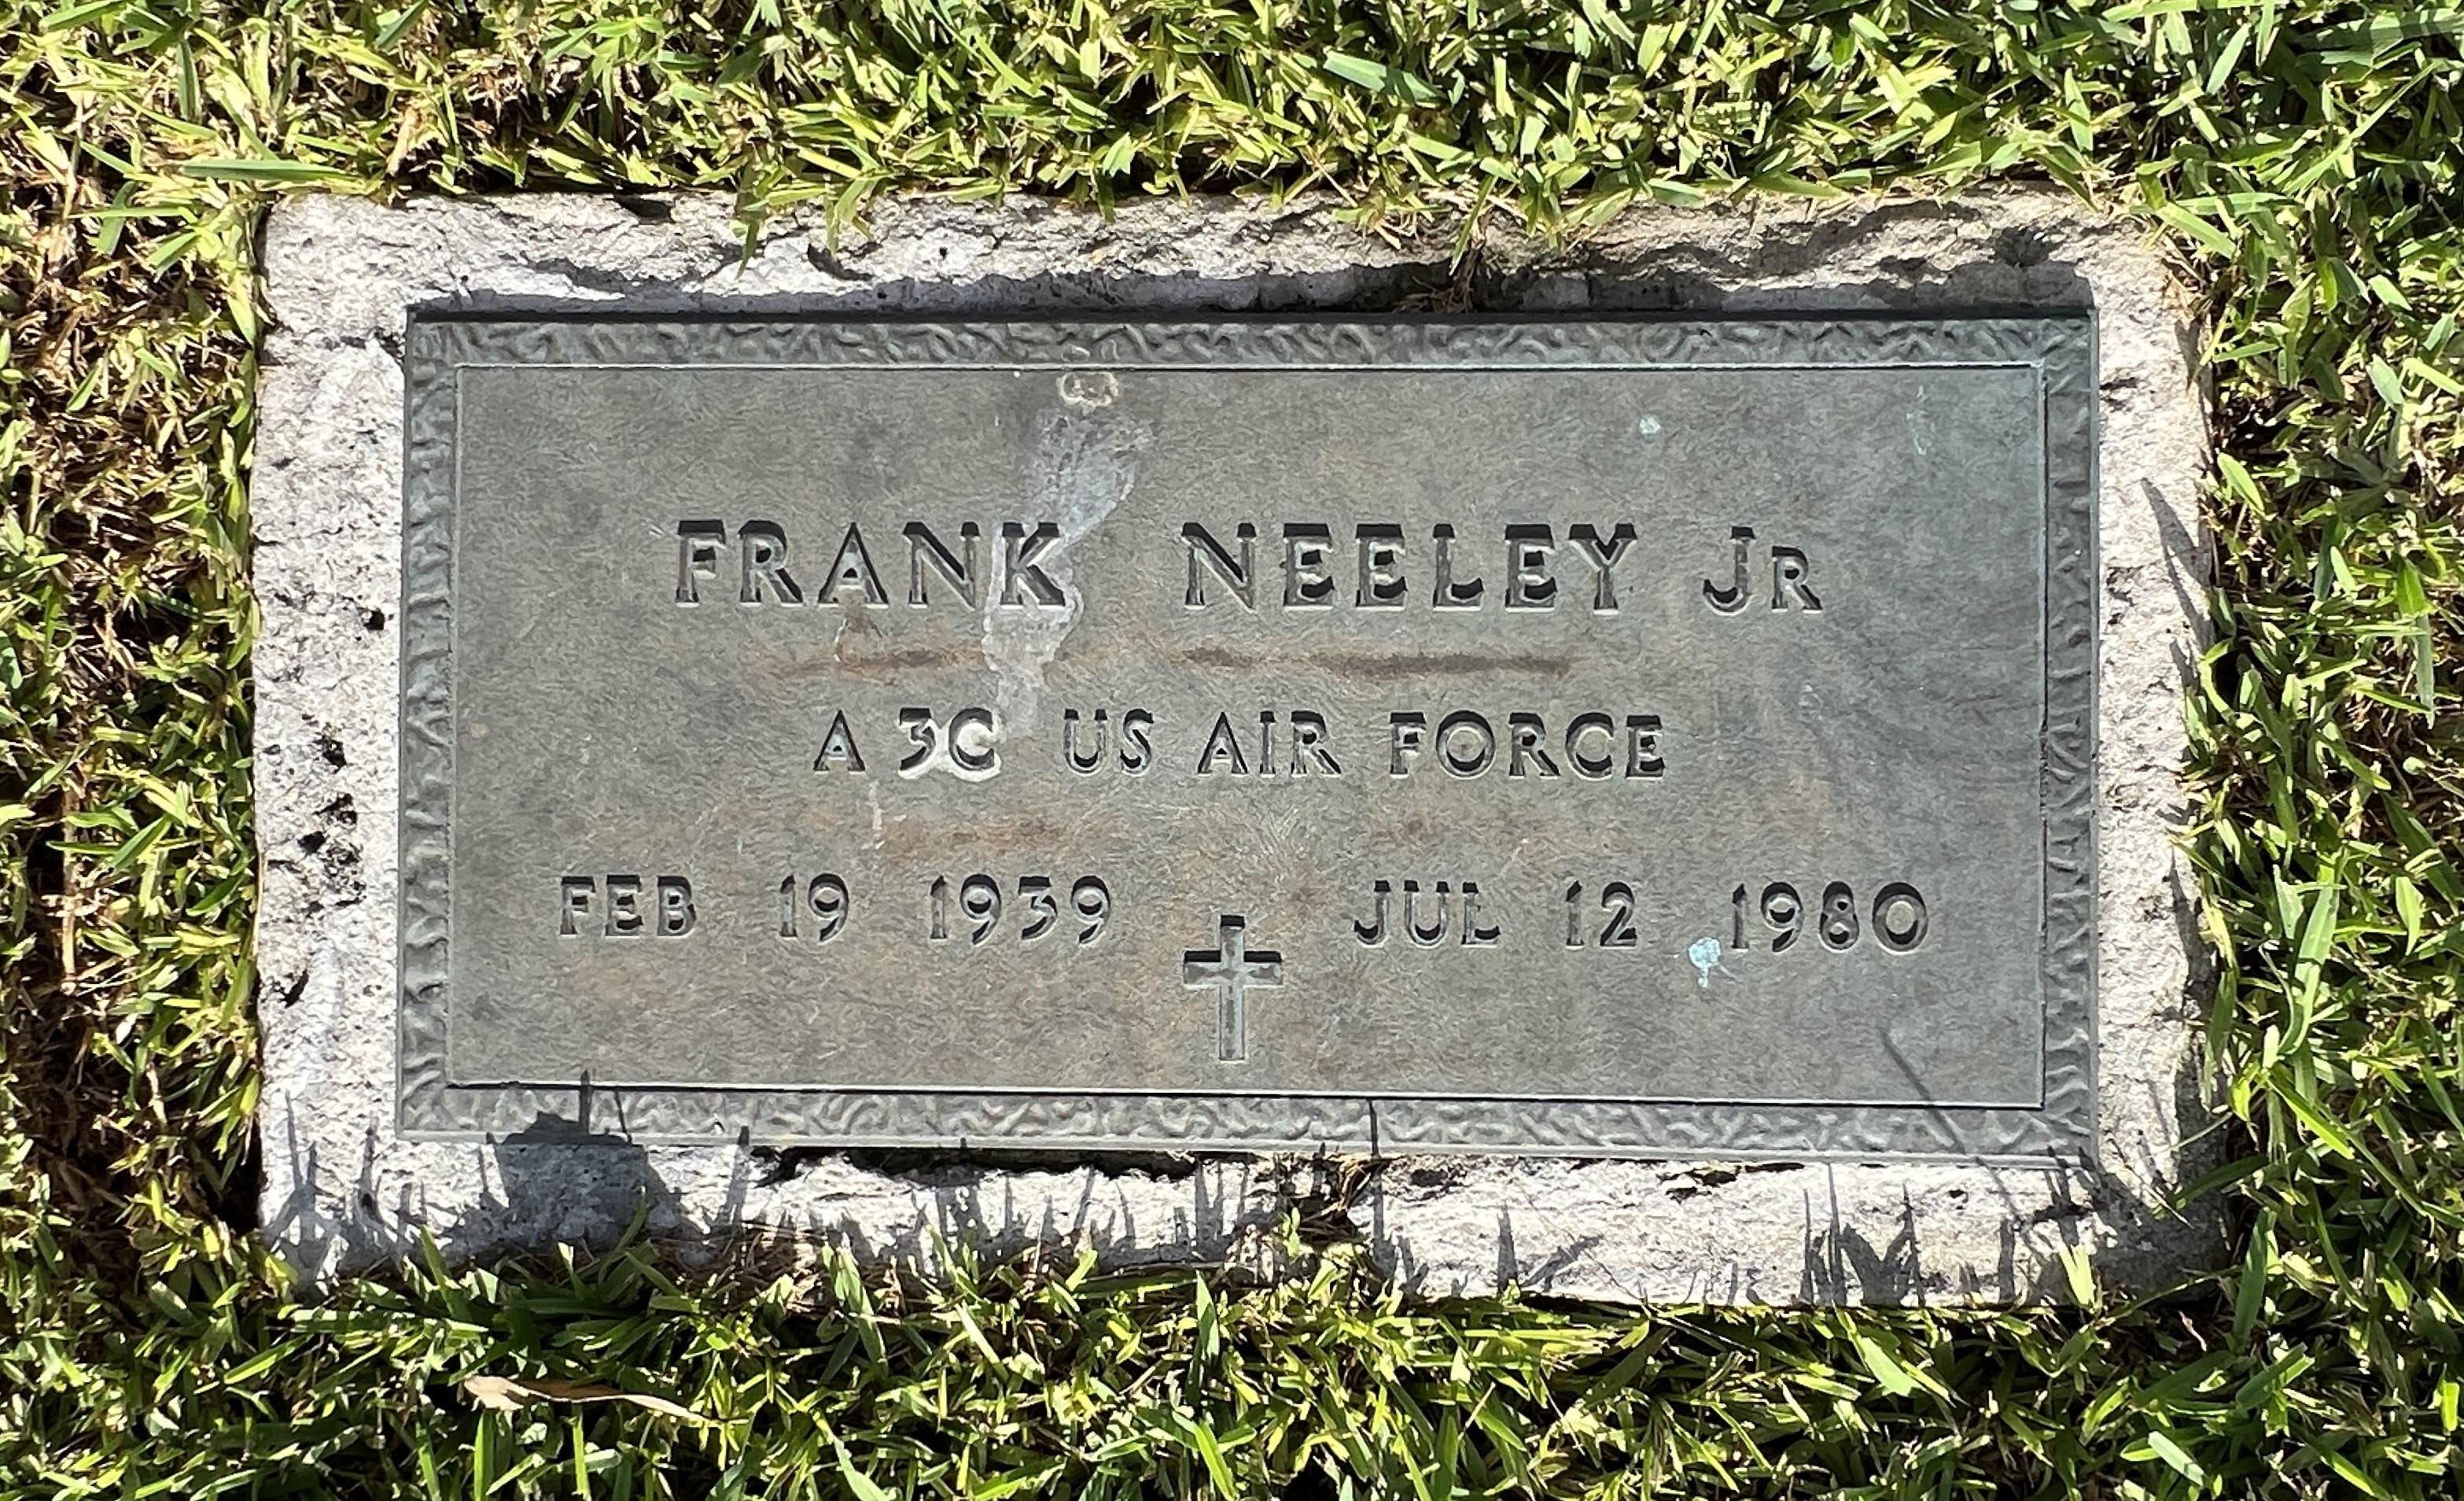 Frank Neeley, Jr